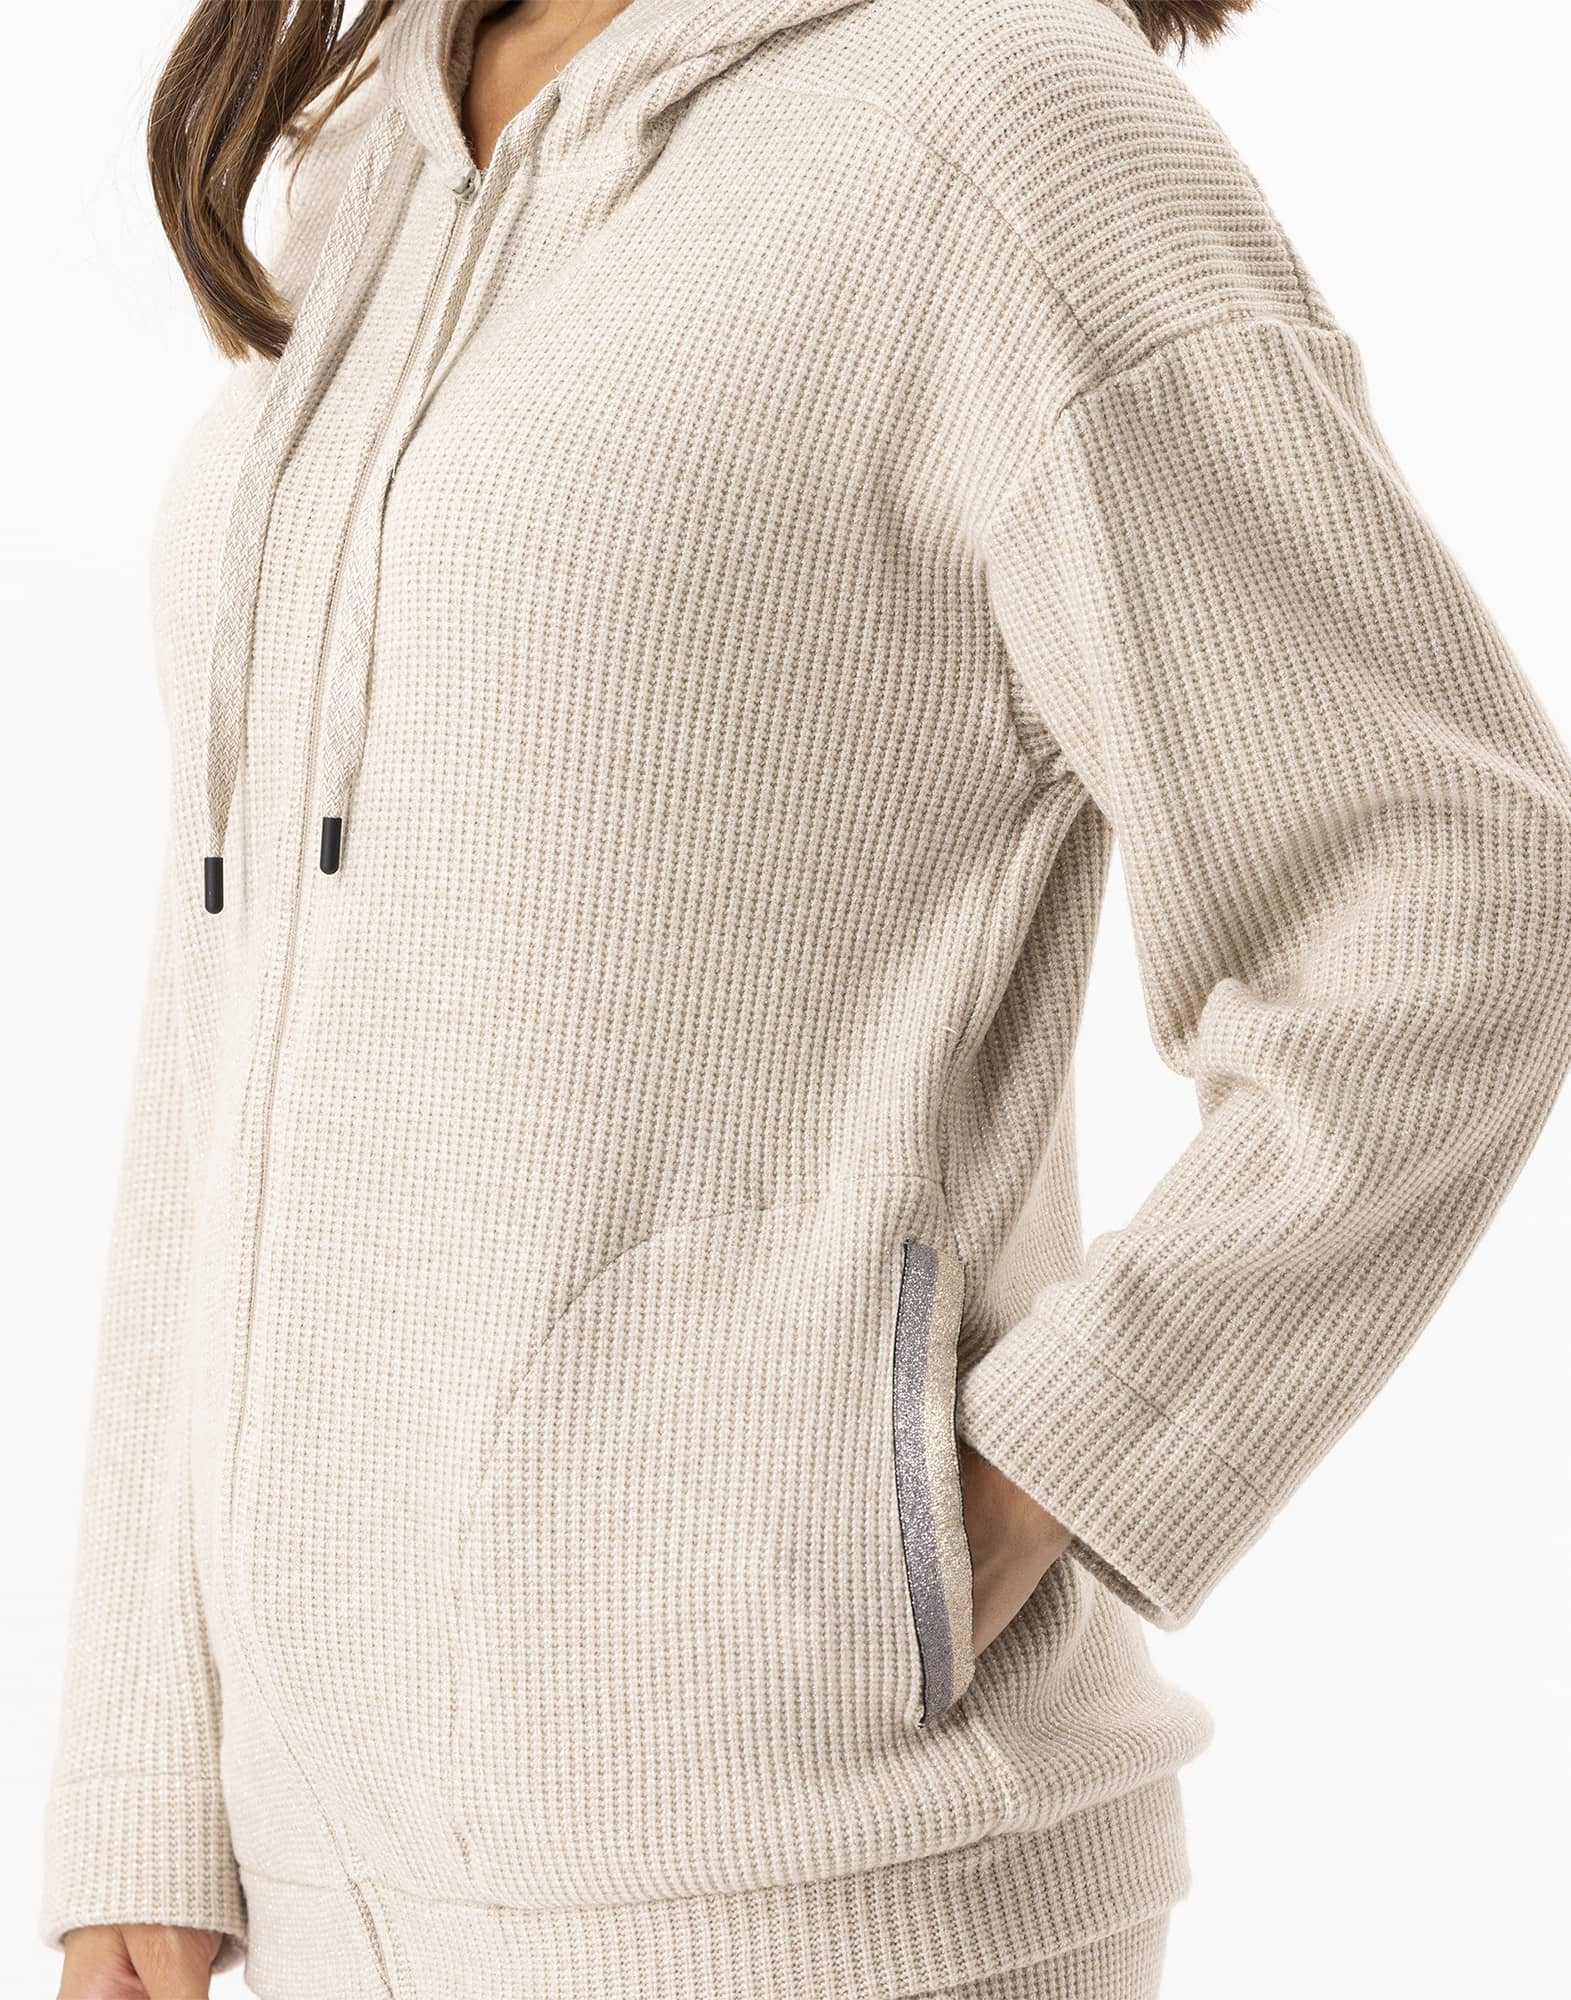 Zip-front hoodie in lurex knit FRILEUSE 670 beige